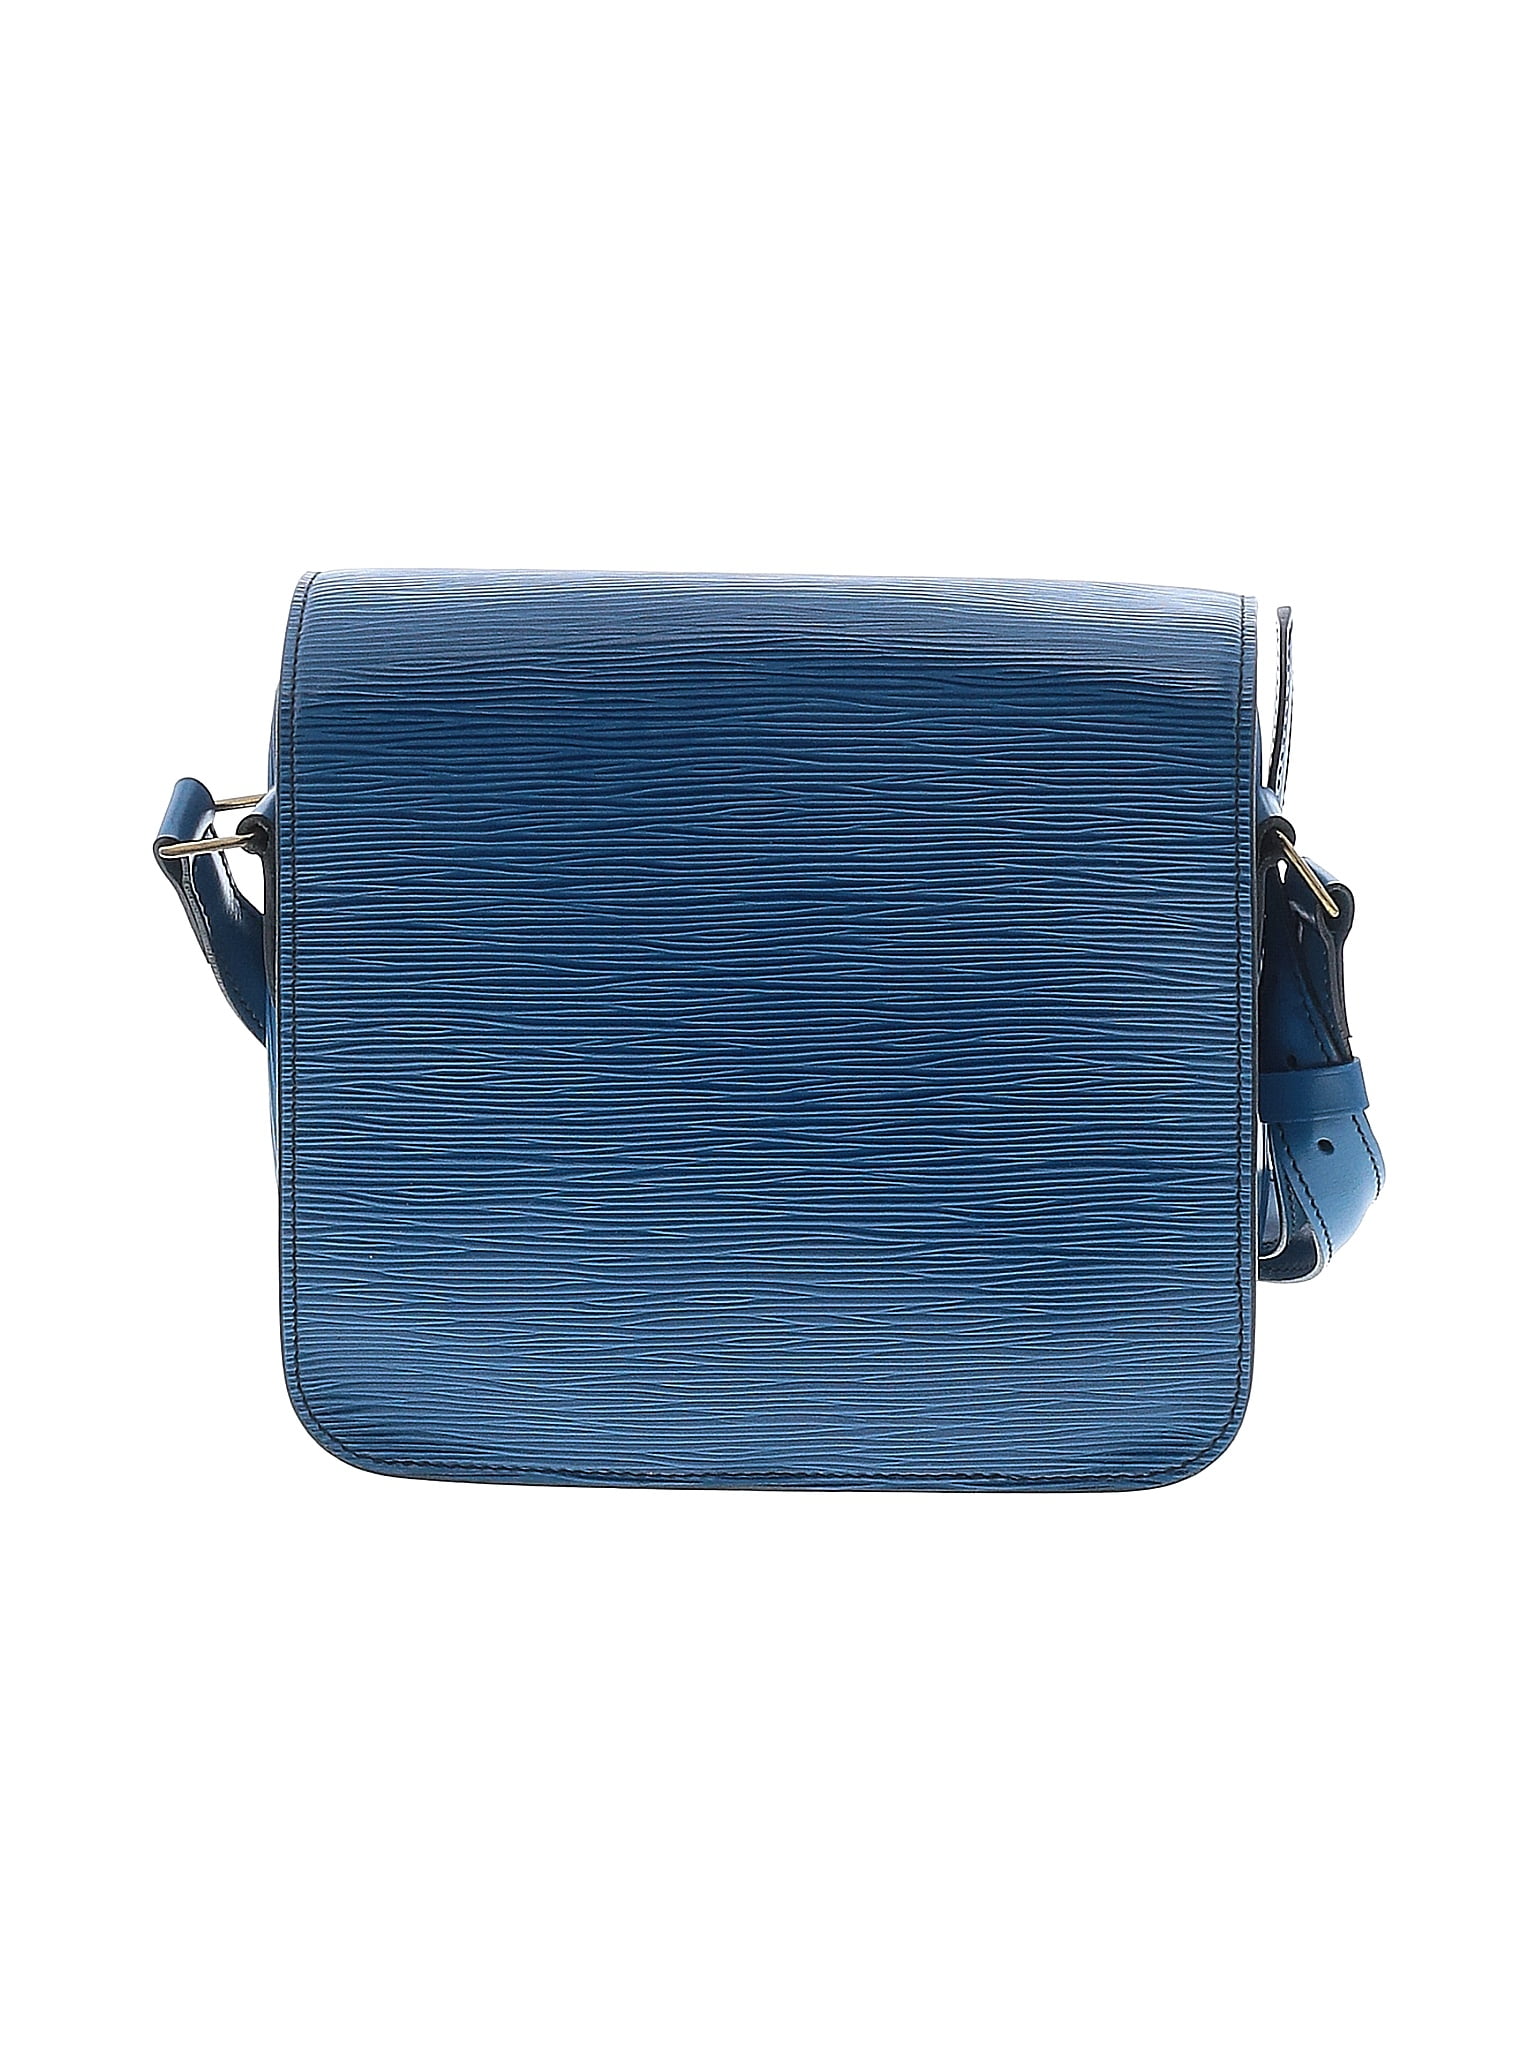 Louis Vuitton Scarf: Blue Checkered/Gingham Accessories, thredUP